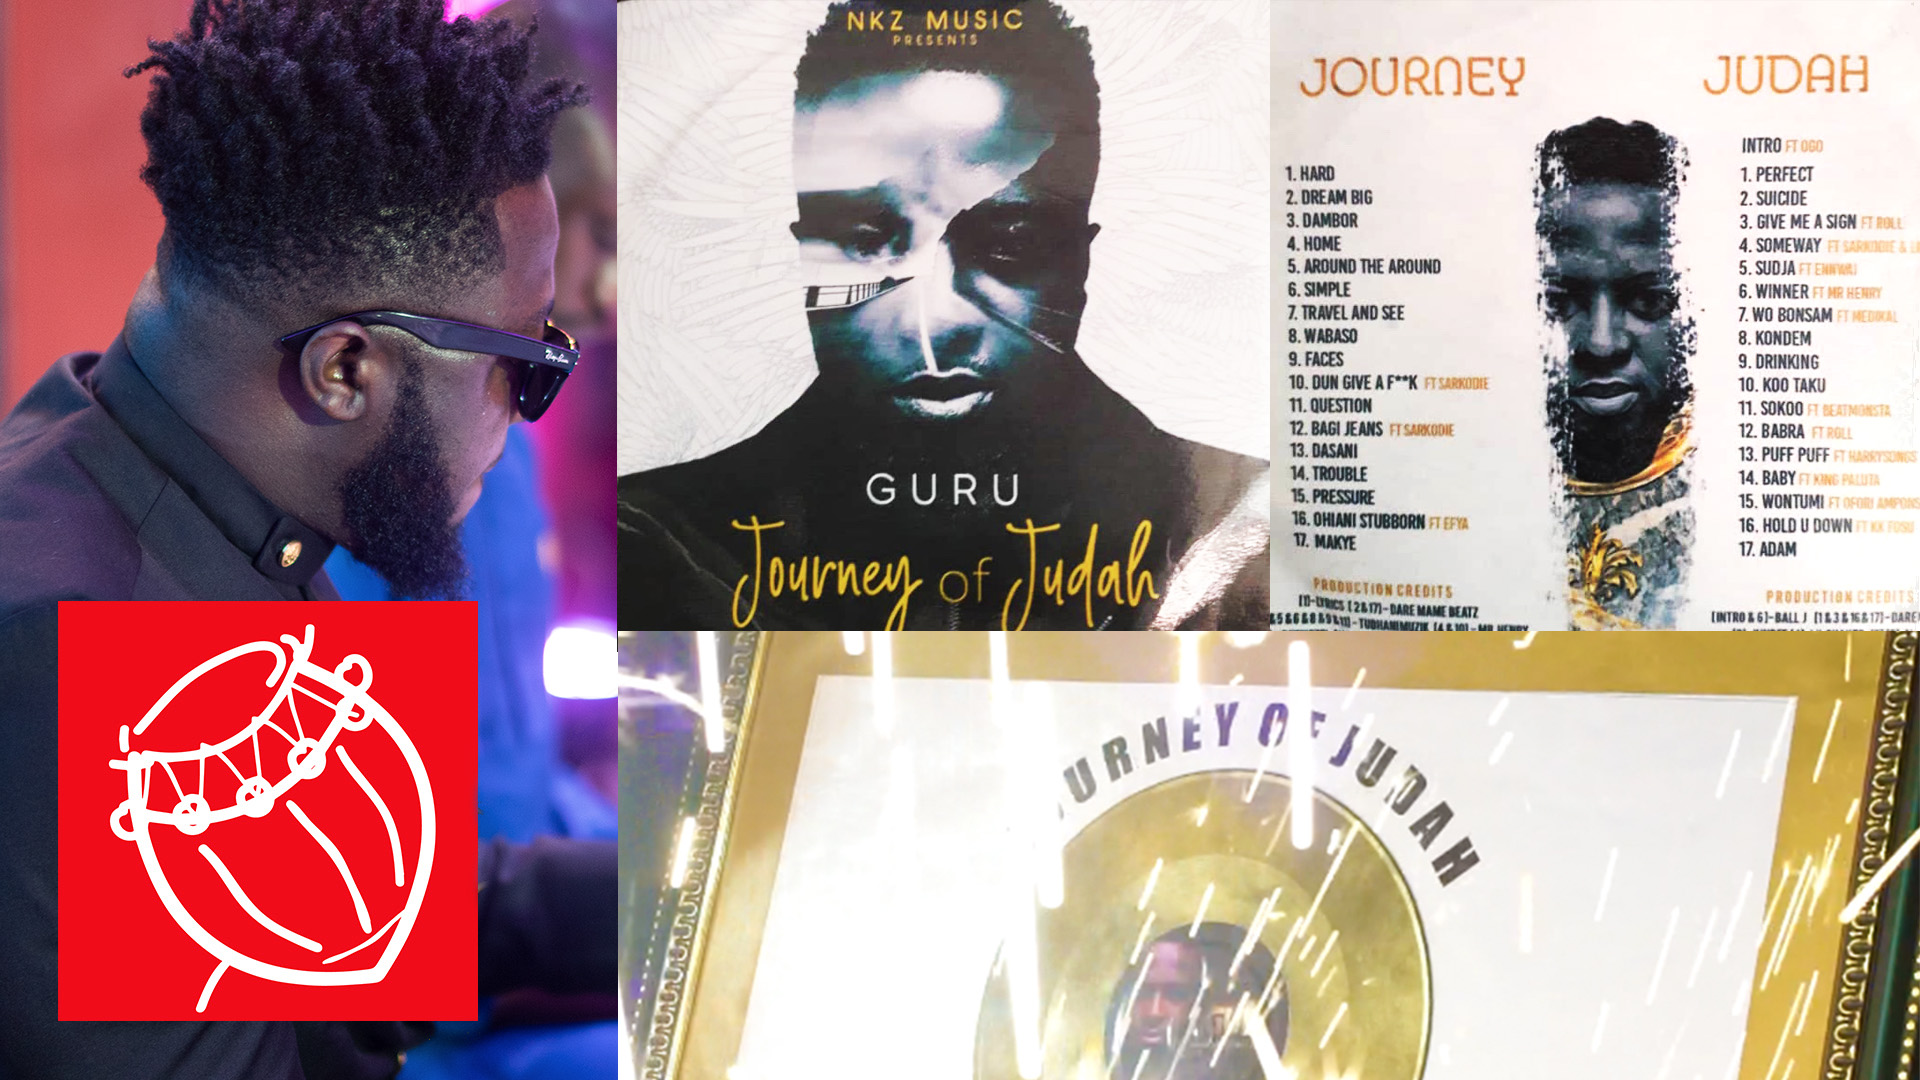 Guru - Journey of Judah